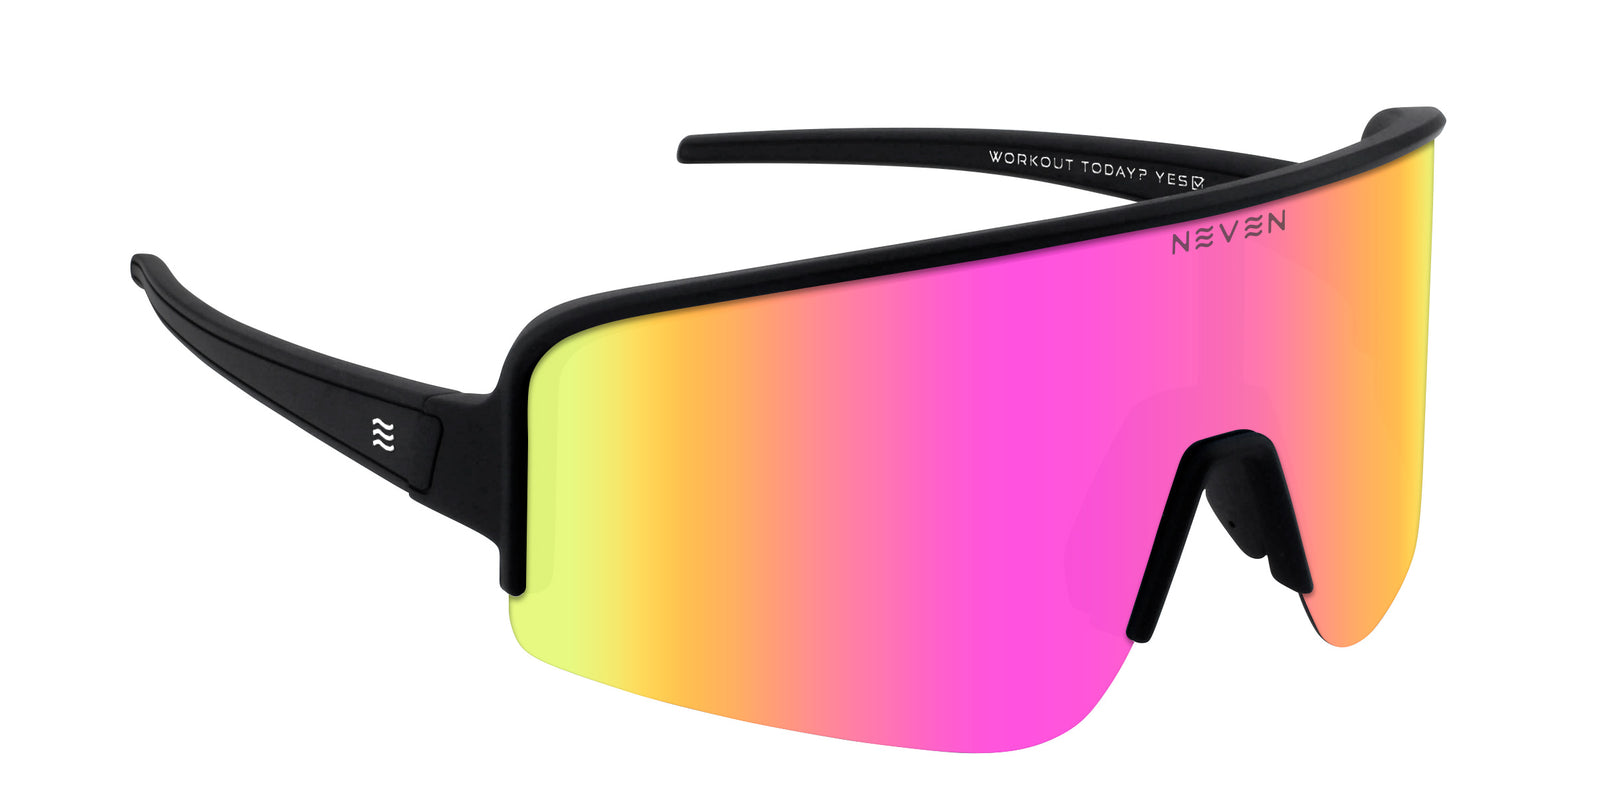 Eyewear® On-Trend, Sunglasses | Neven Polarized, Affordable